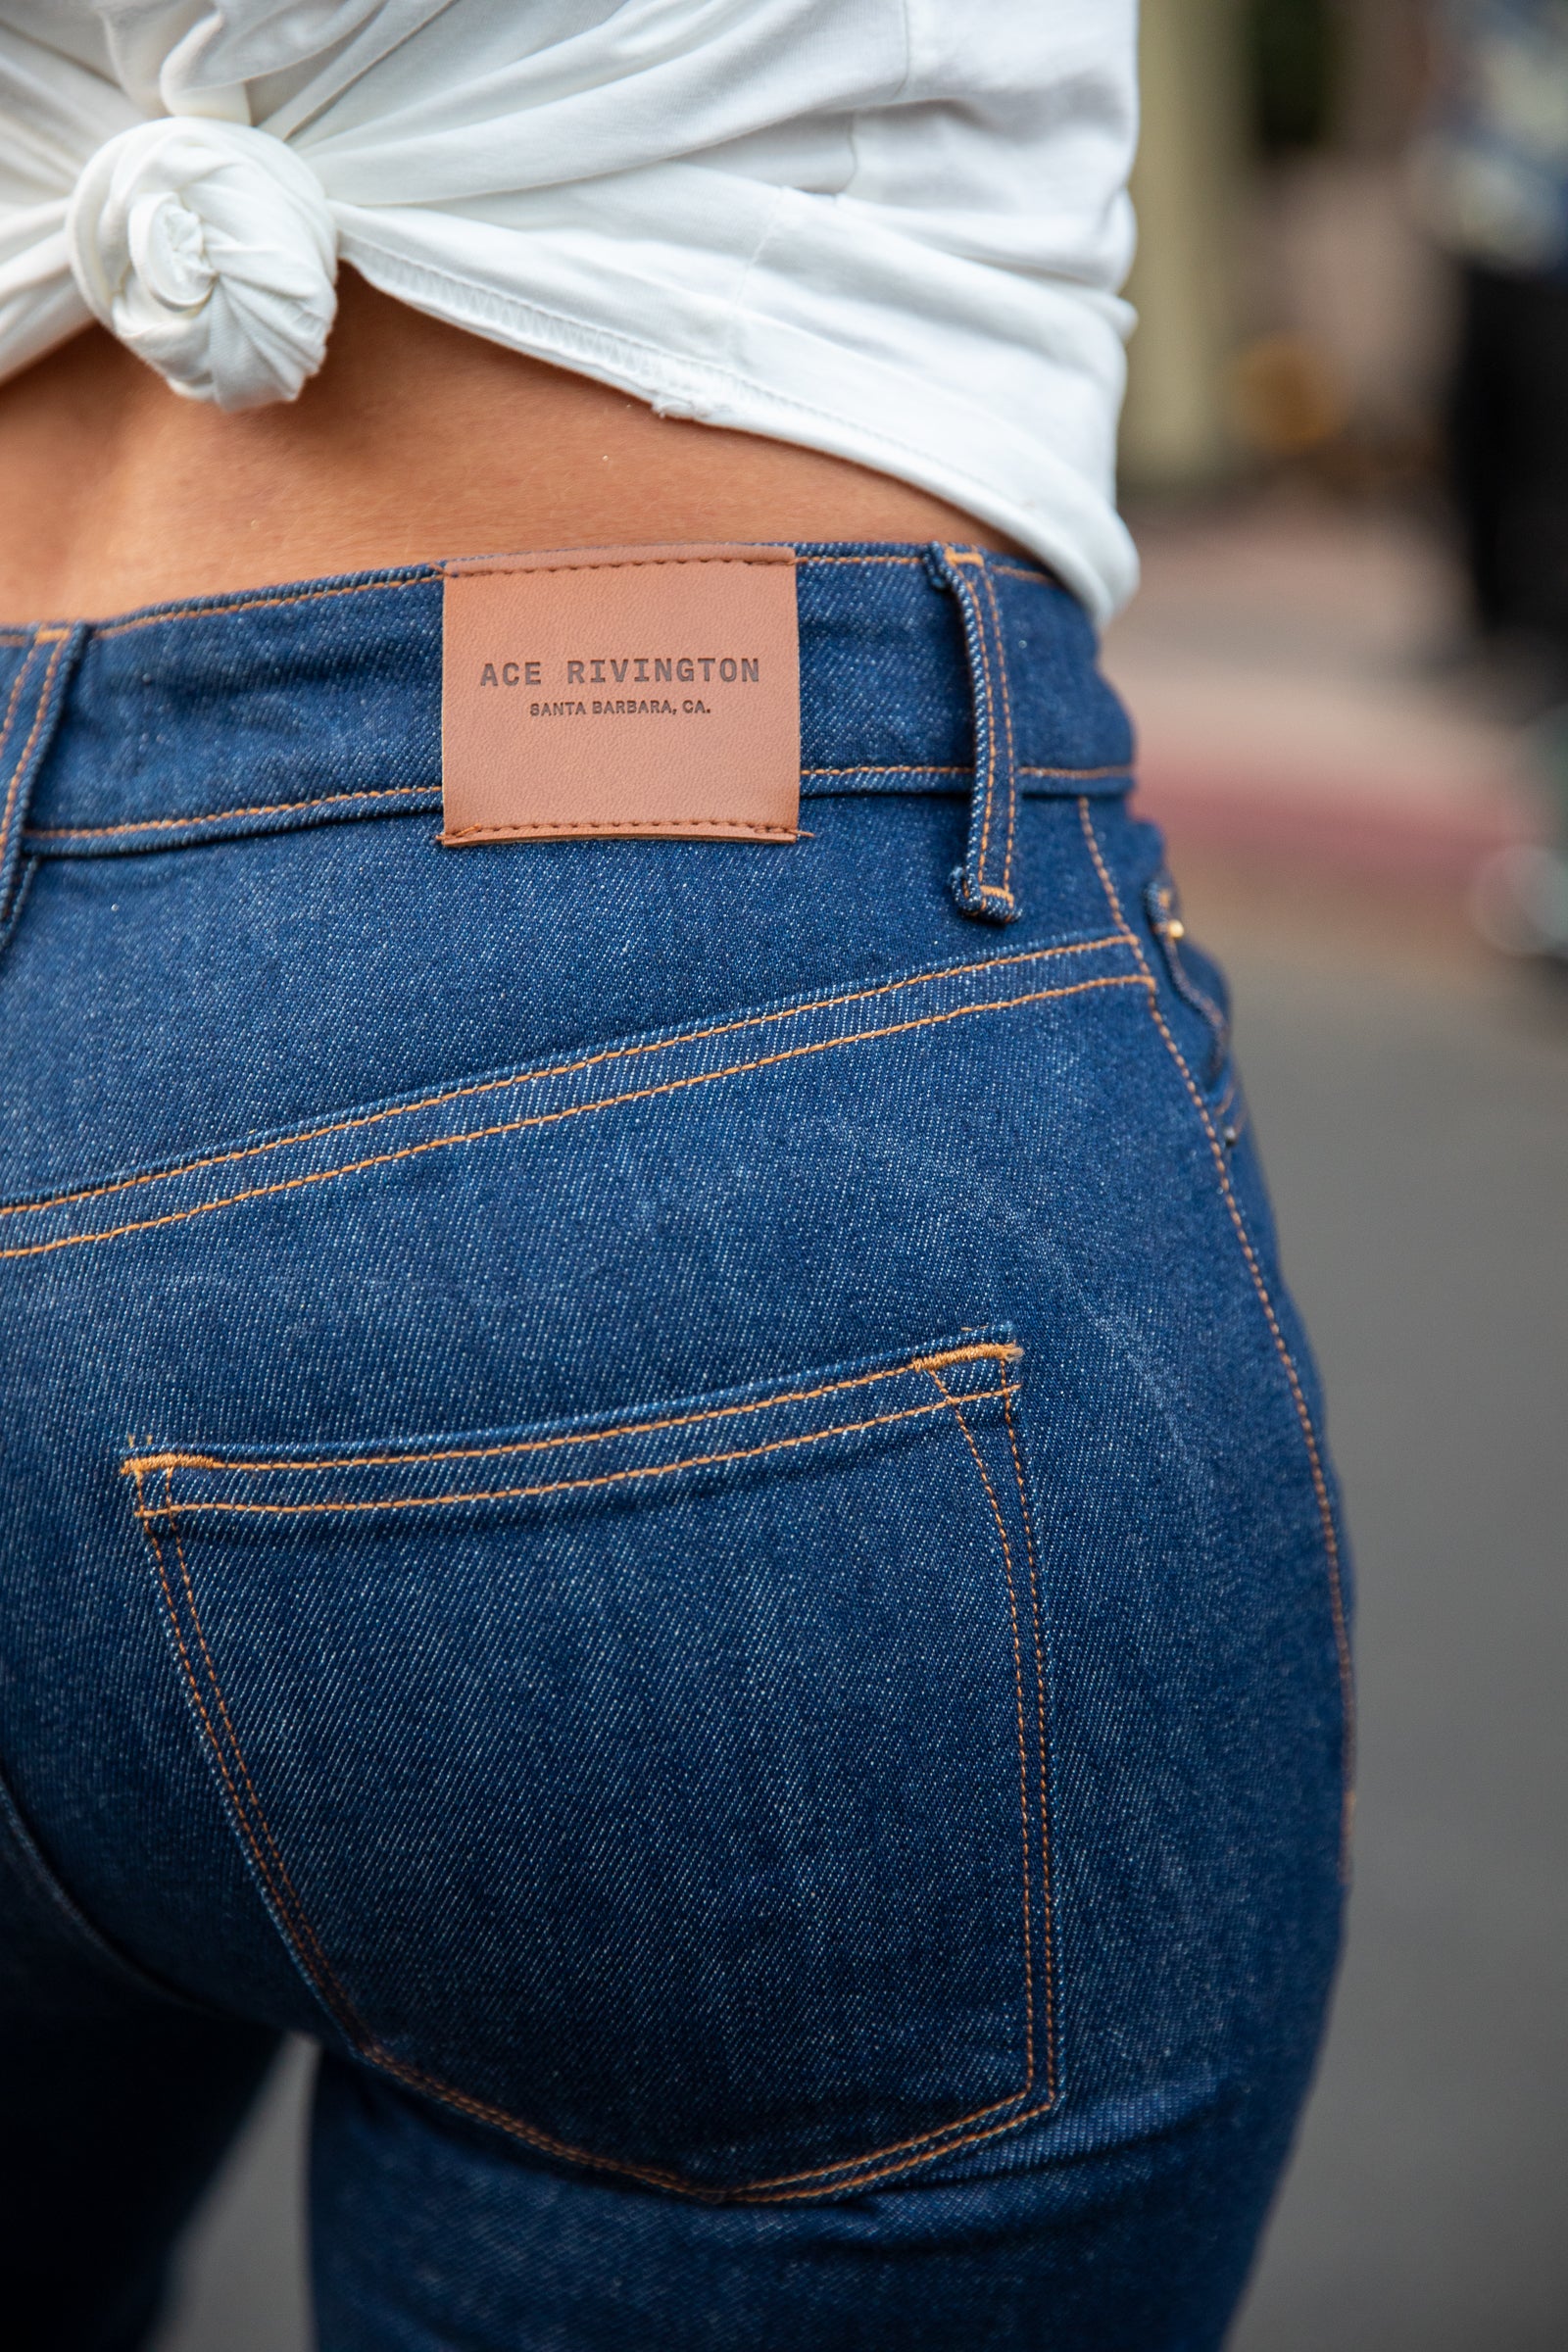 Buy Only Dark Blue Skinny Fit Jeans for Women Online @ Tata CLiQ